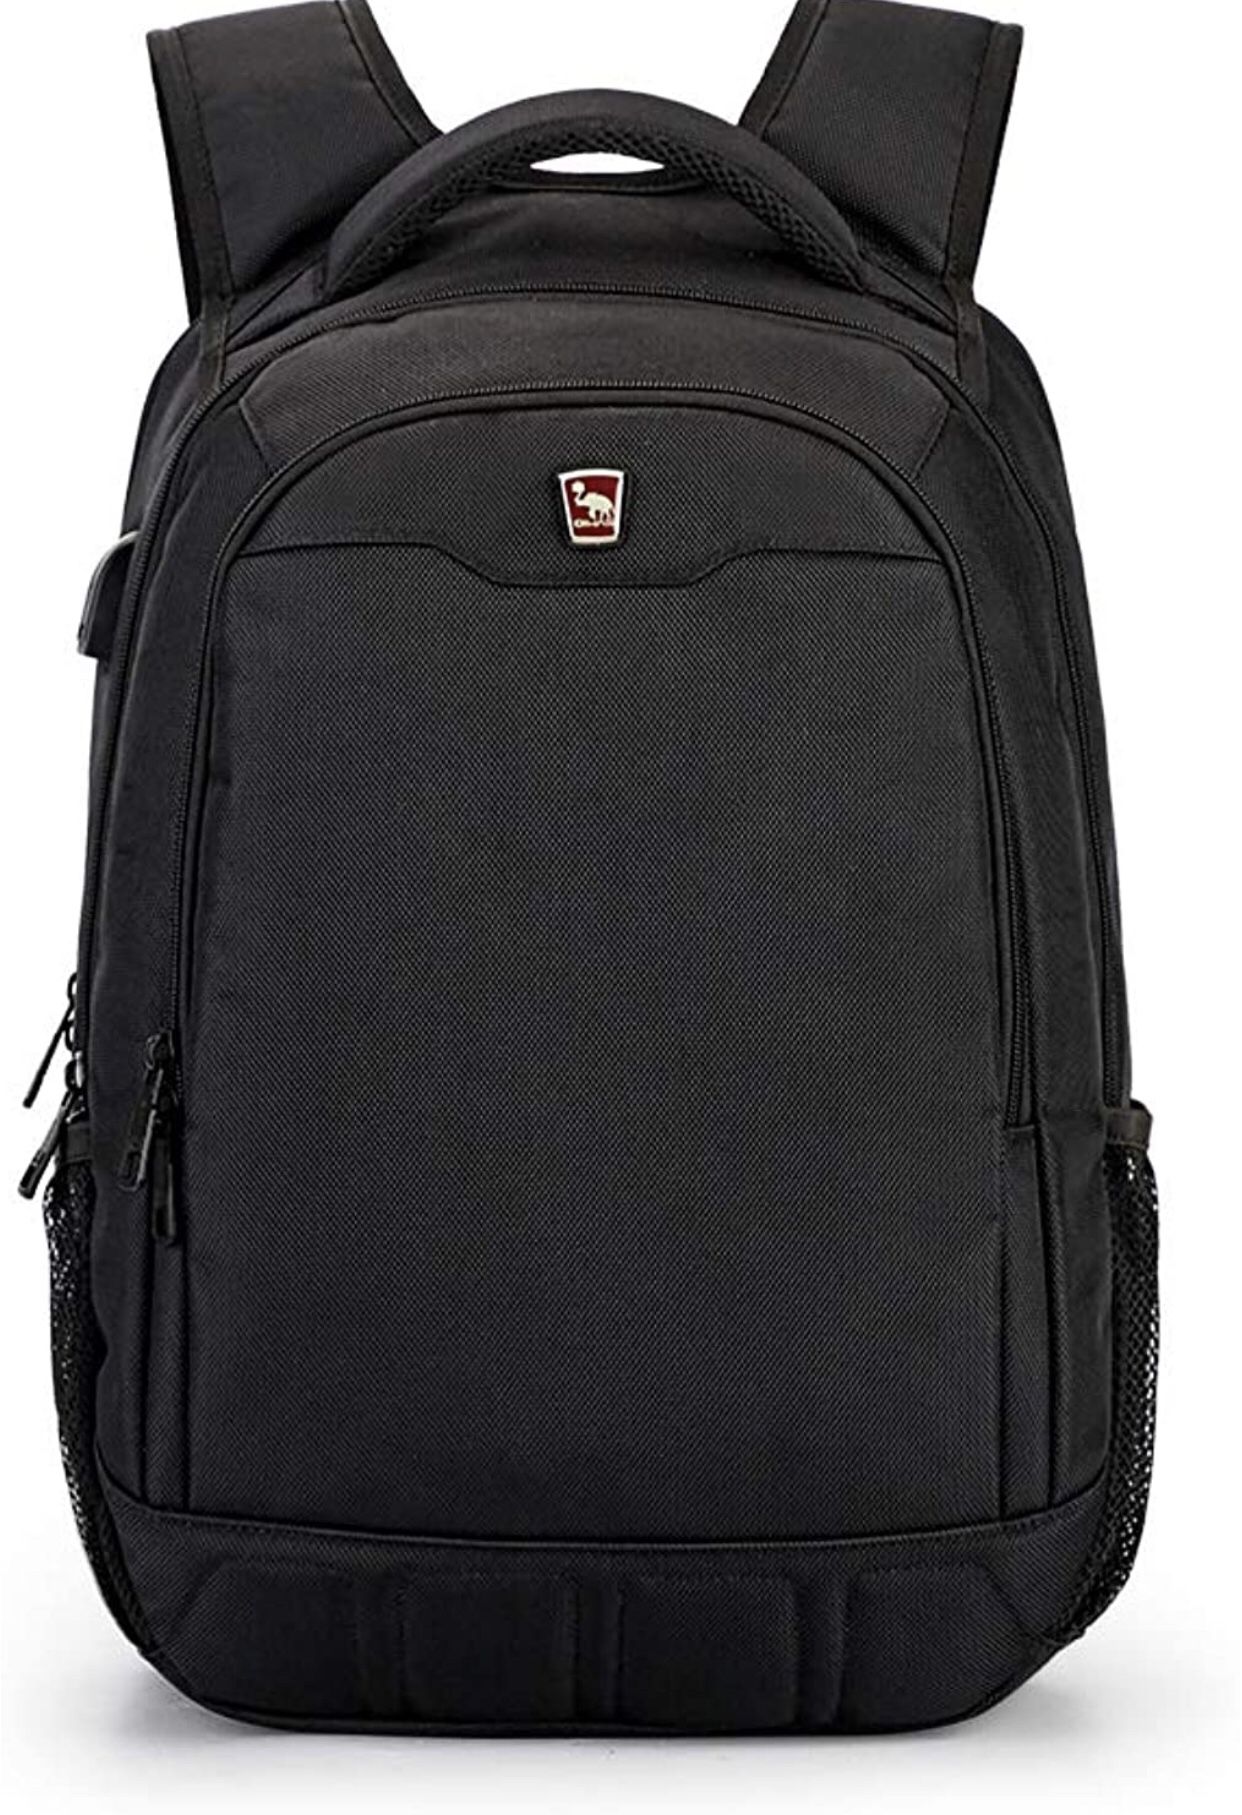 15 Inch Laptop Backpack For Men 14 15.6 In Business Bagpack Boys Travel Daypack 28.5L Large College School Bookbag